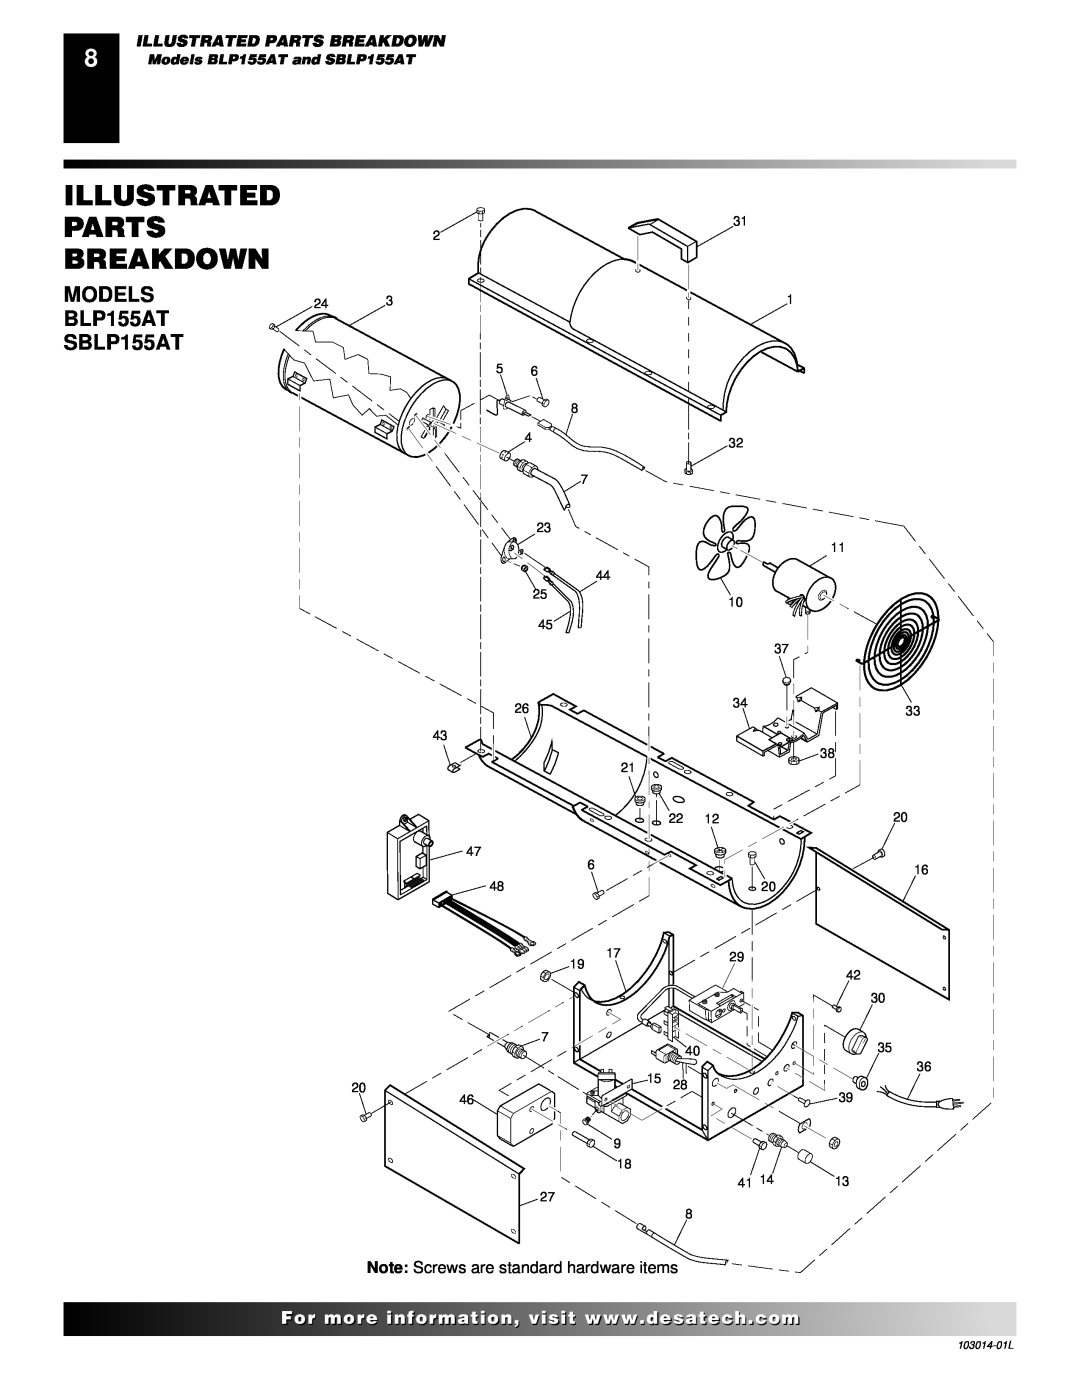 Desa owner manual Illustrated Parts Breakdown, Models BLP155AT and SBLP155AT 